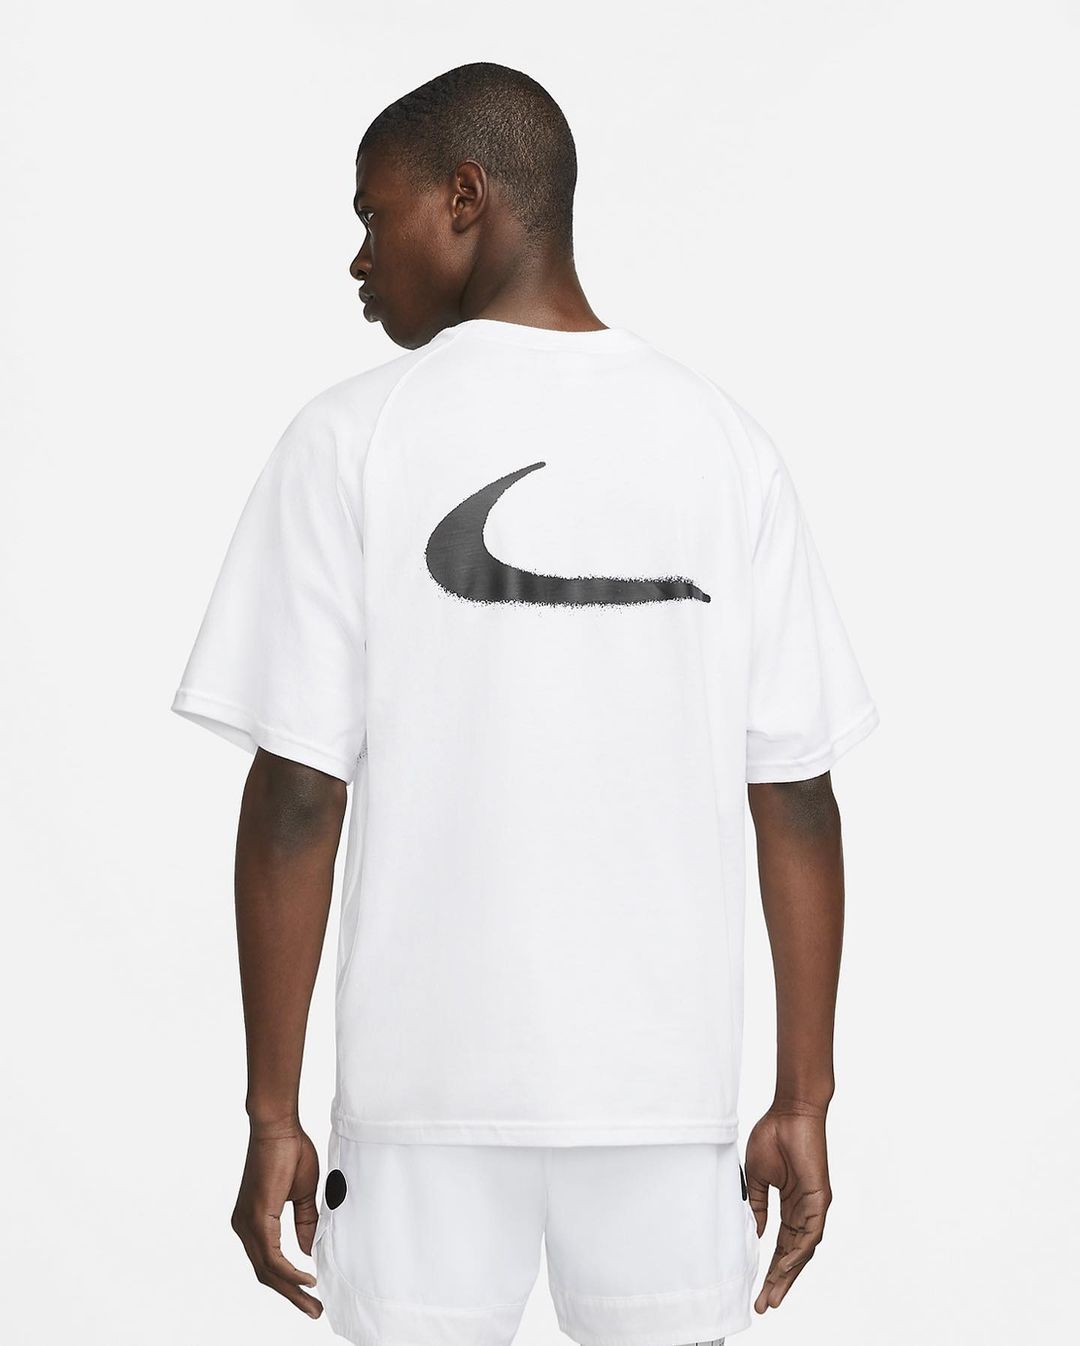 OFF-WHITE,Nike,发售  SNKRS 预告 OFF-WHITE x Nike！超多单品本周发售！